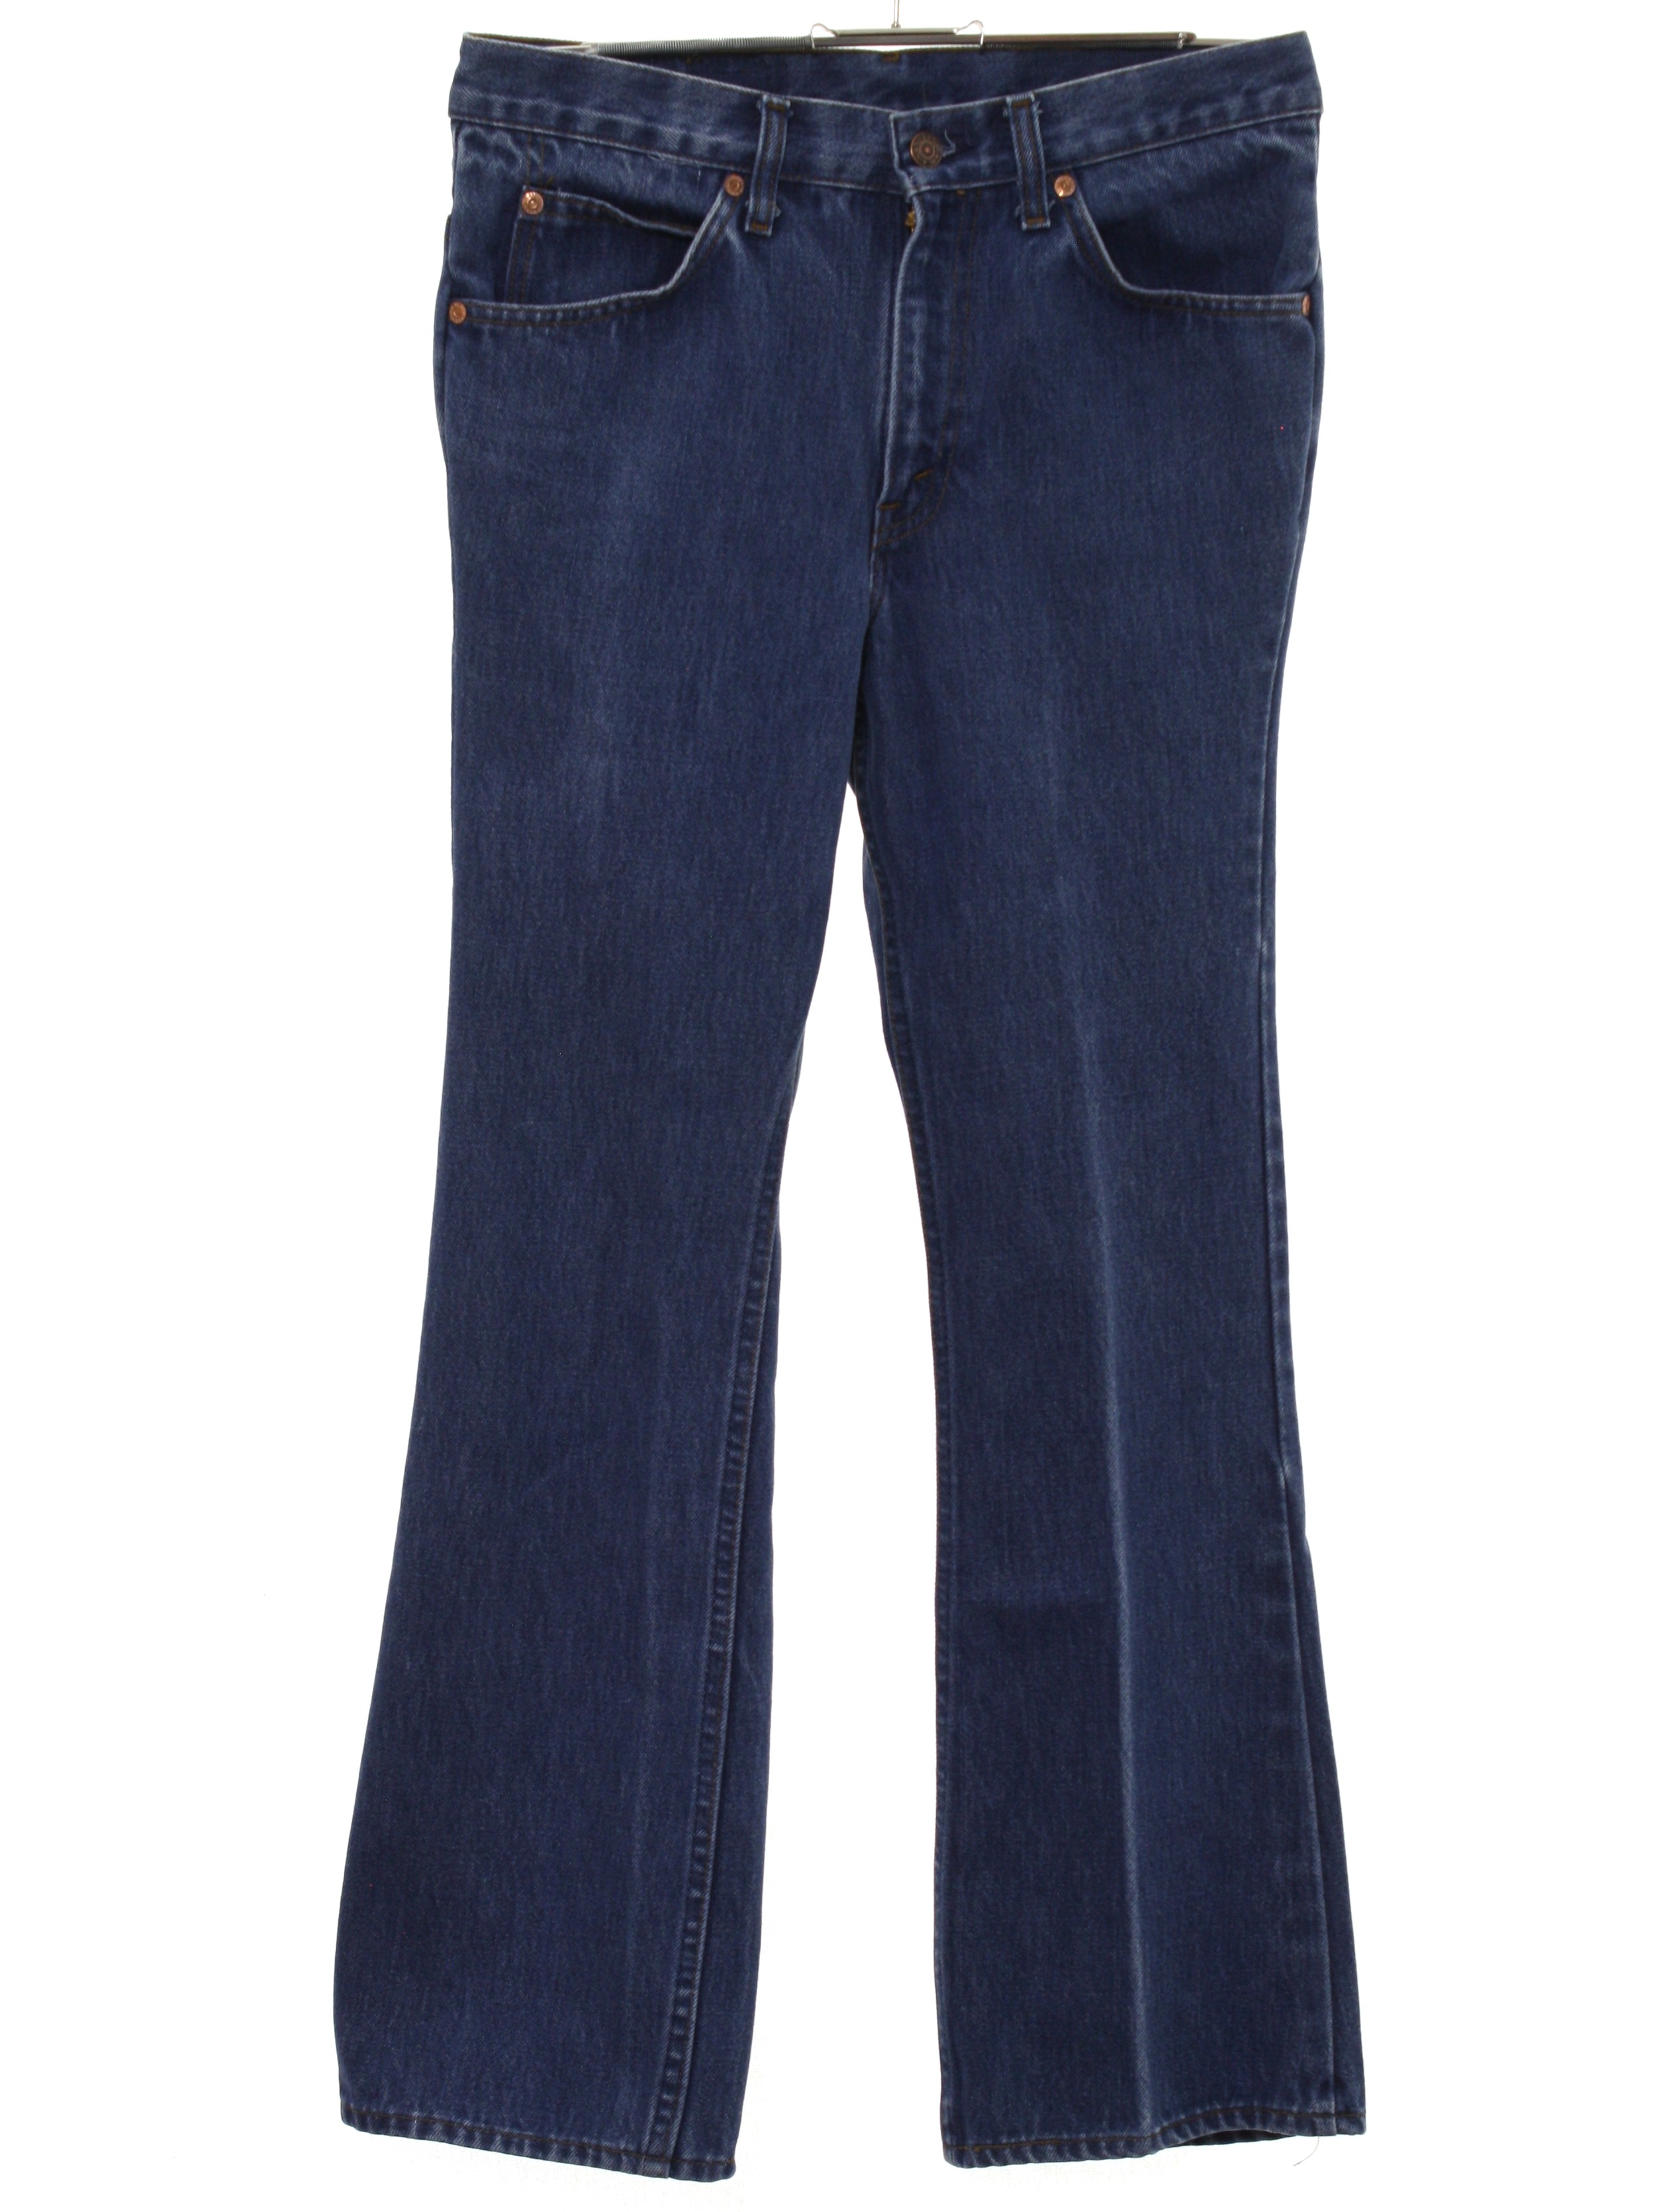 Plain Pockets 1970s Vintage Flared Pants / Flares: 70s -Plain Pockets ...